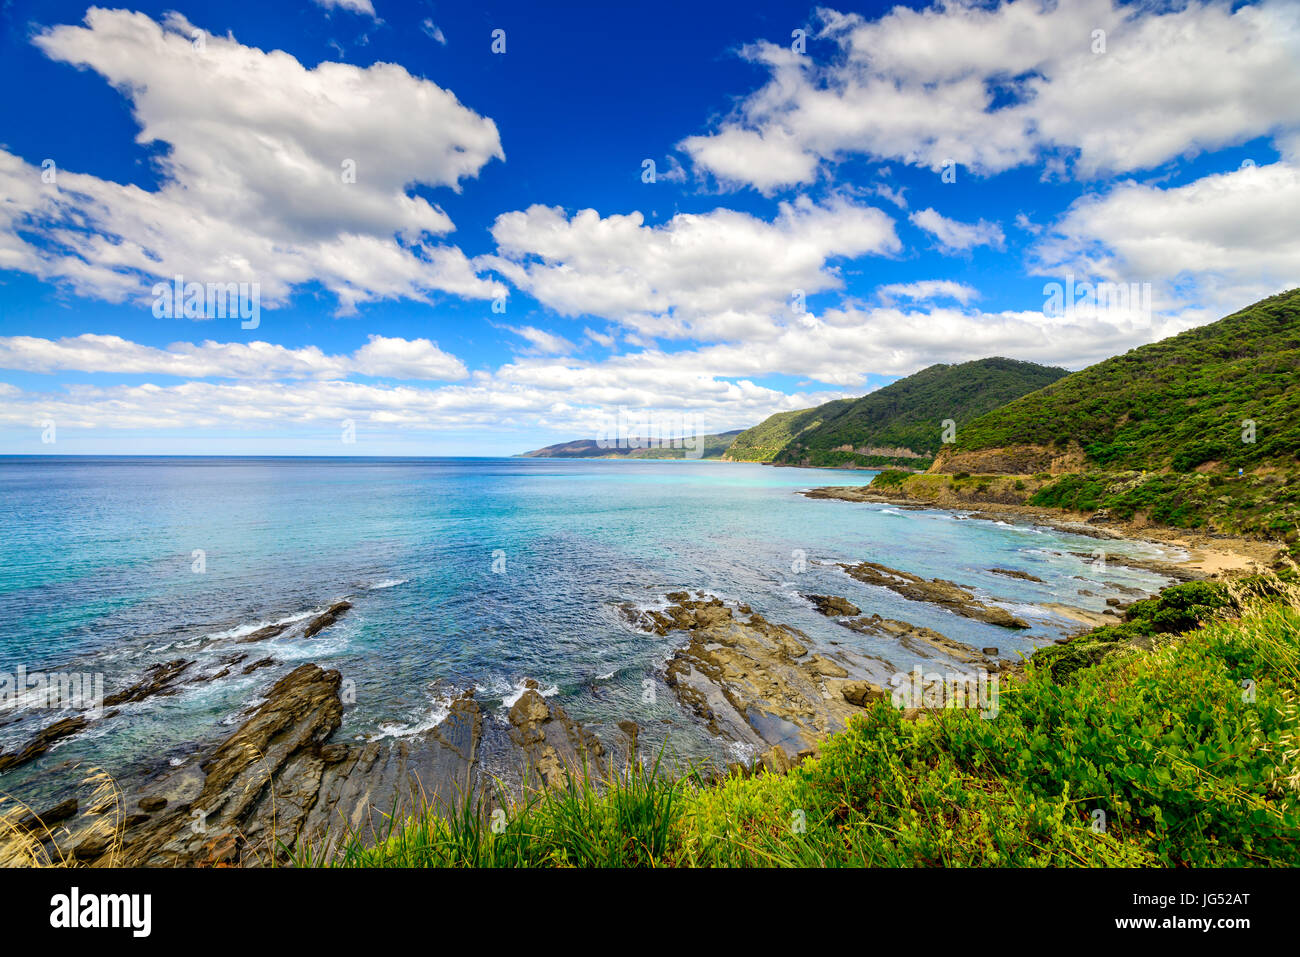 Scenic coastal landscape along the Great Ocean road in Lorne, Victoria, Australia Stock Photo